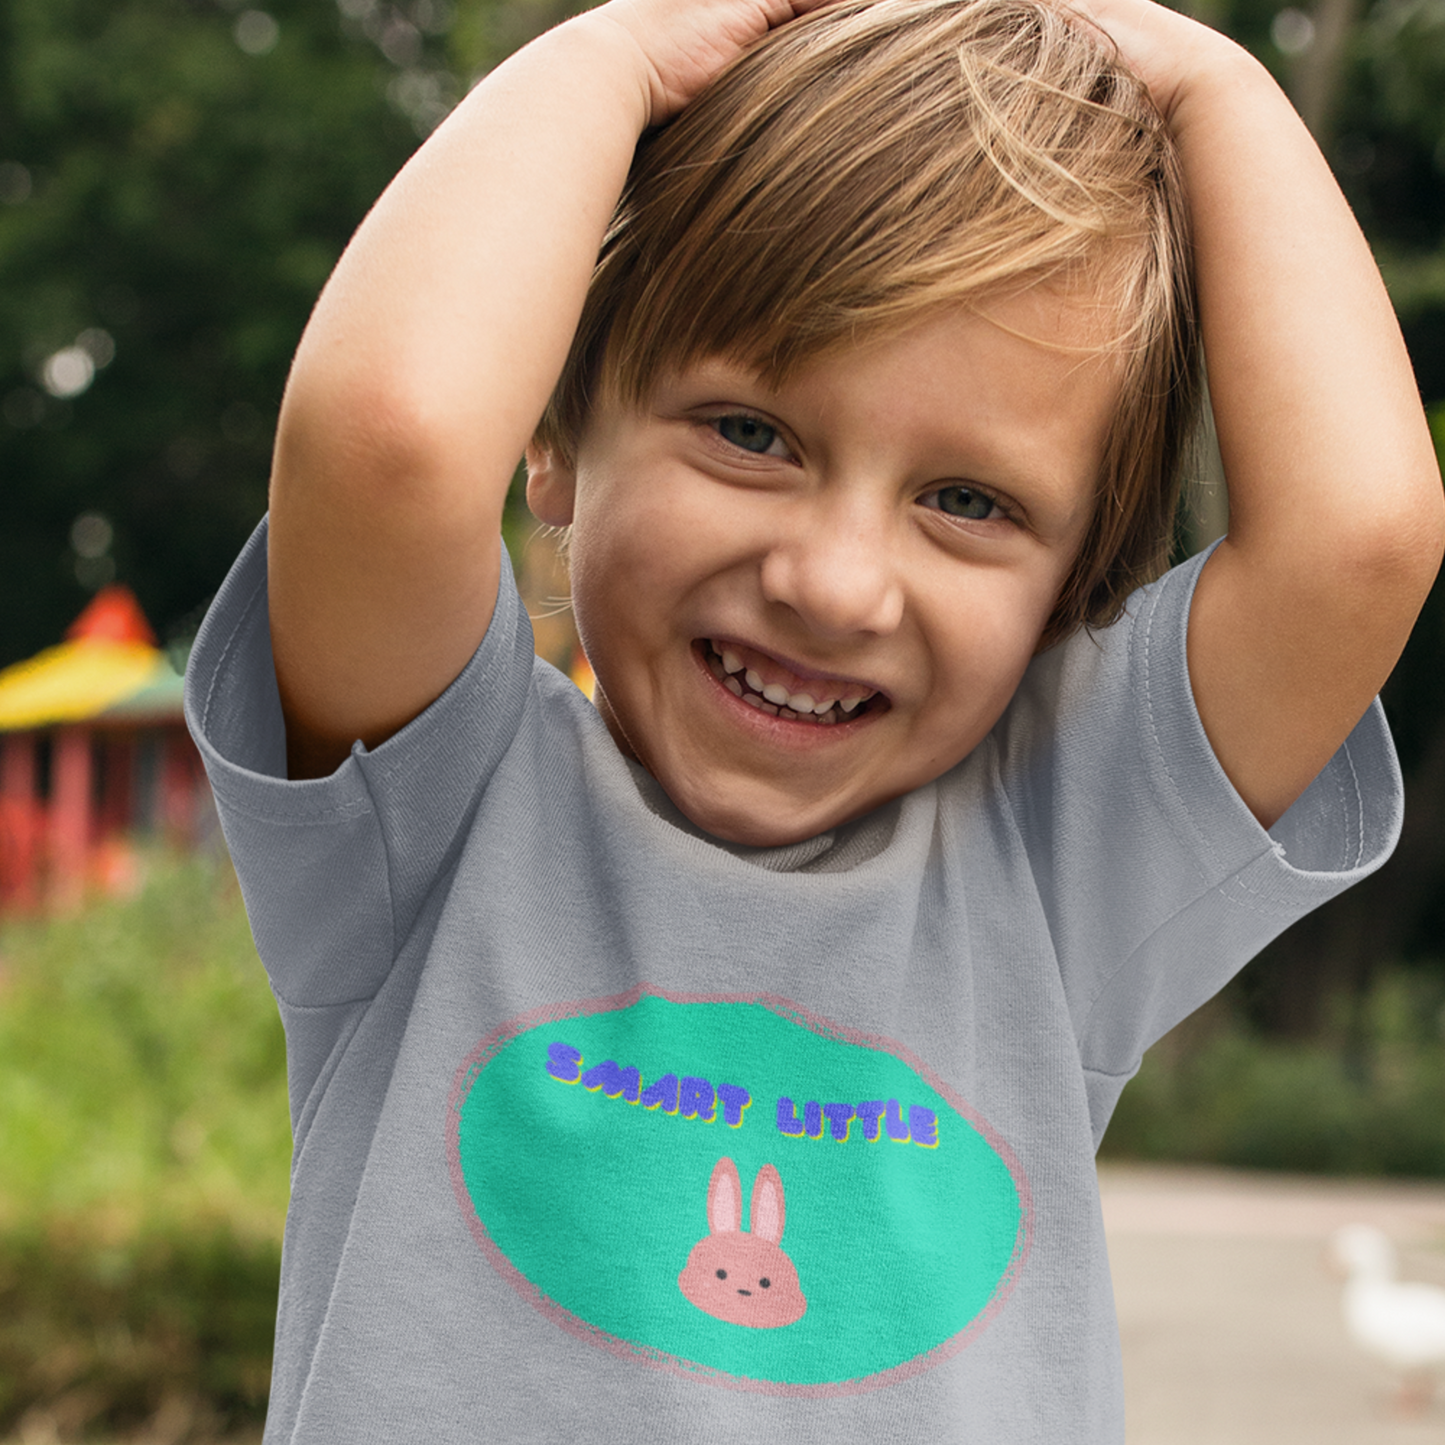 Smart little bunny kids t shirt gift, tshirt gift for curious kids, mom gift for kids, dad gift to child